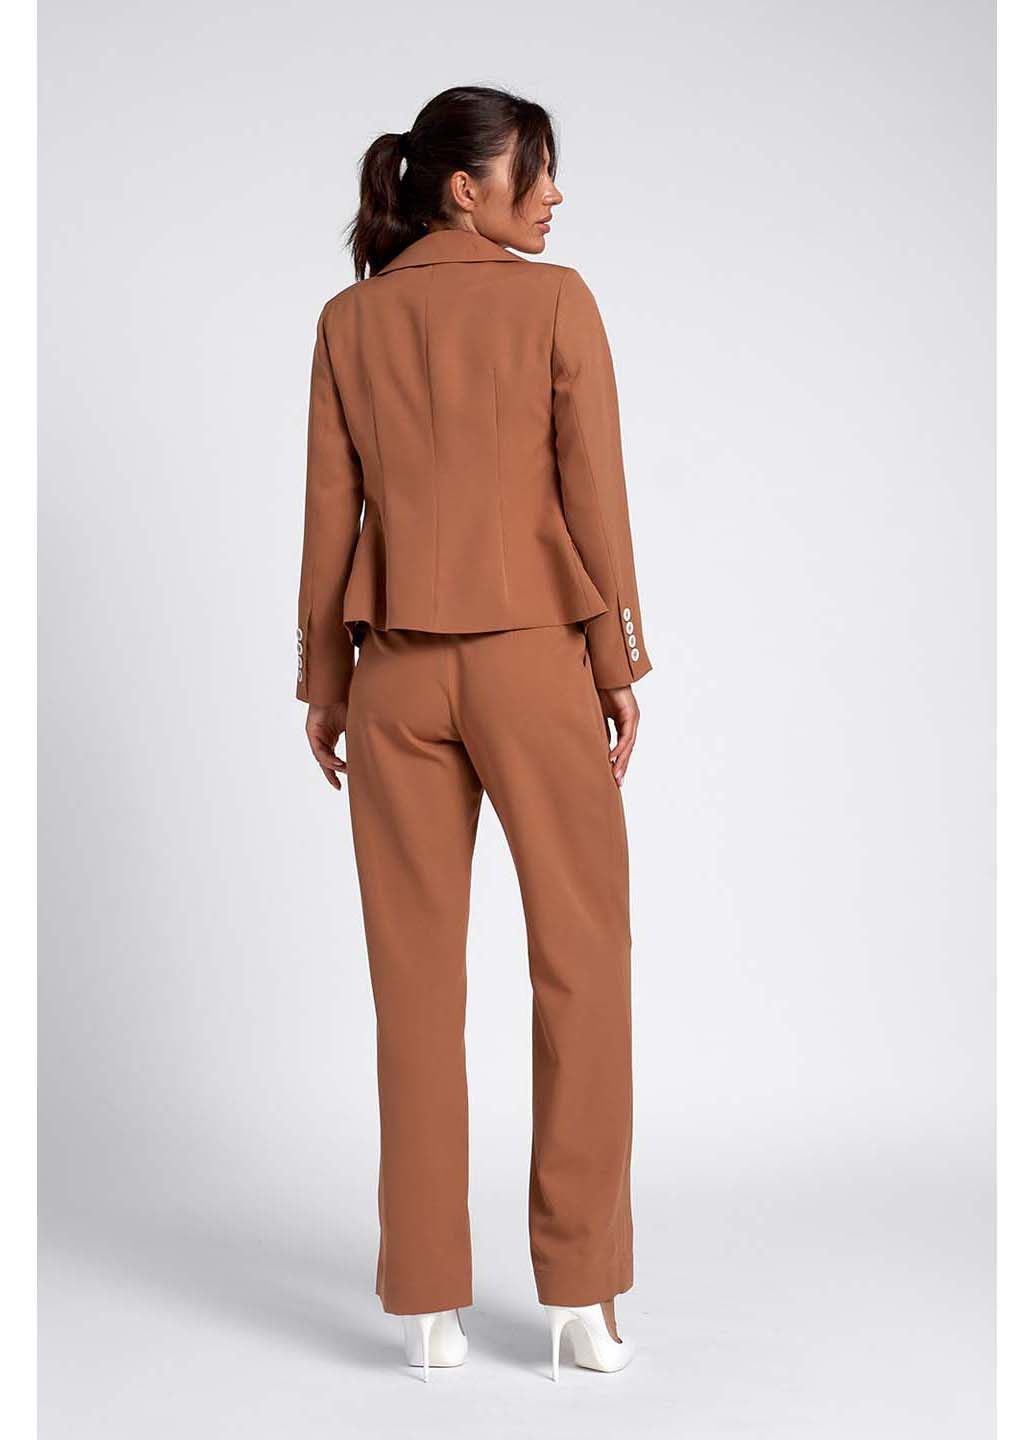 Костюм SL-Fashion однотонный коричневый кэжуал